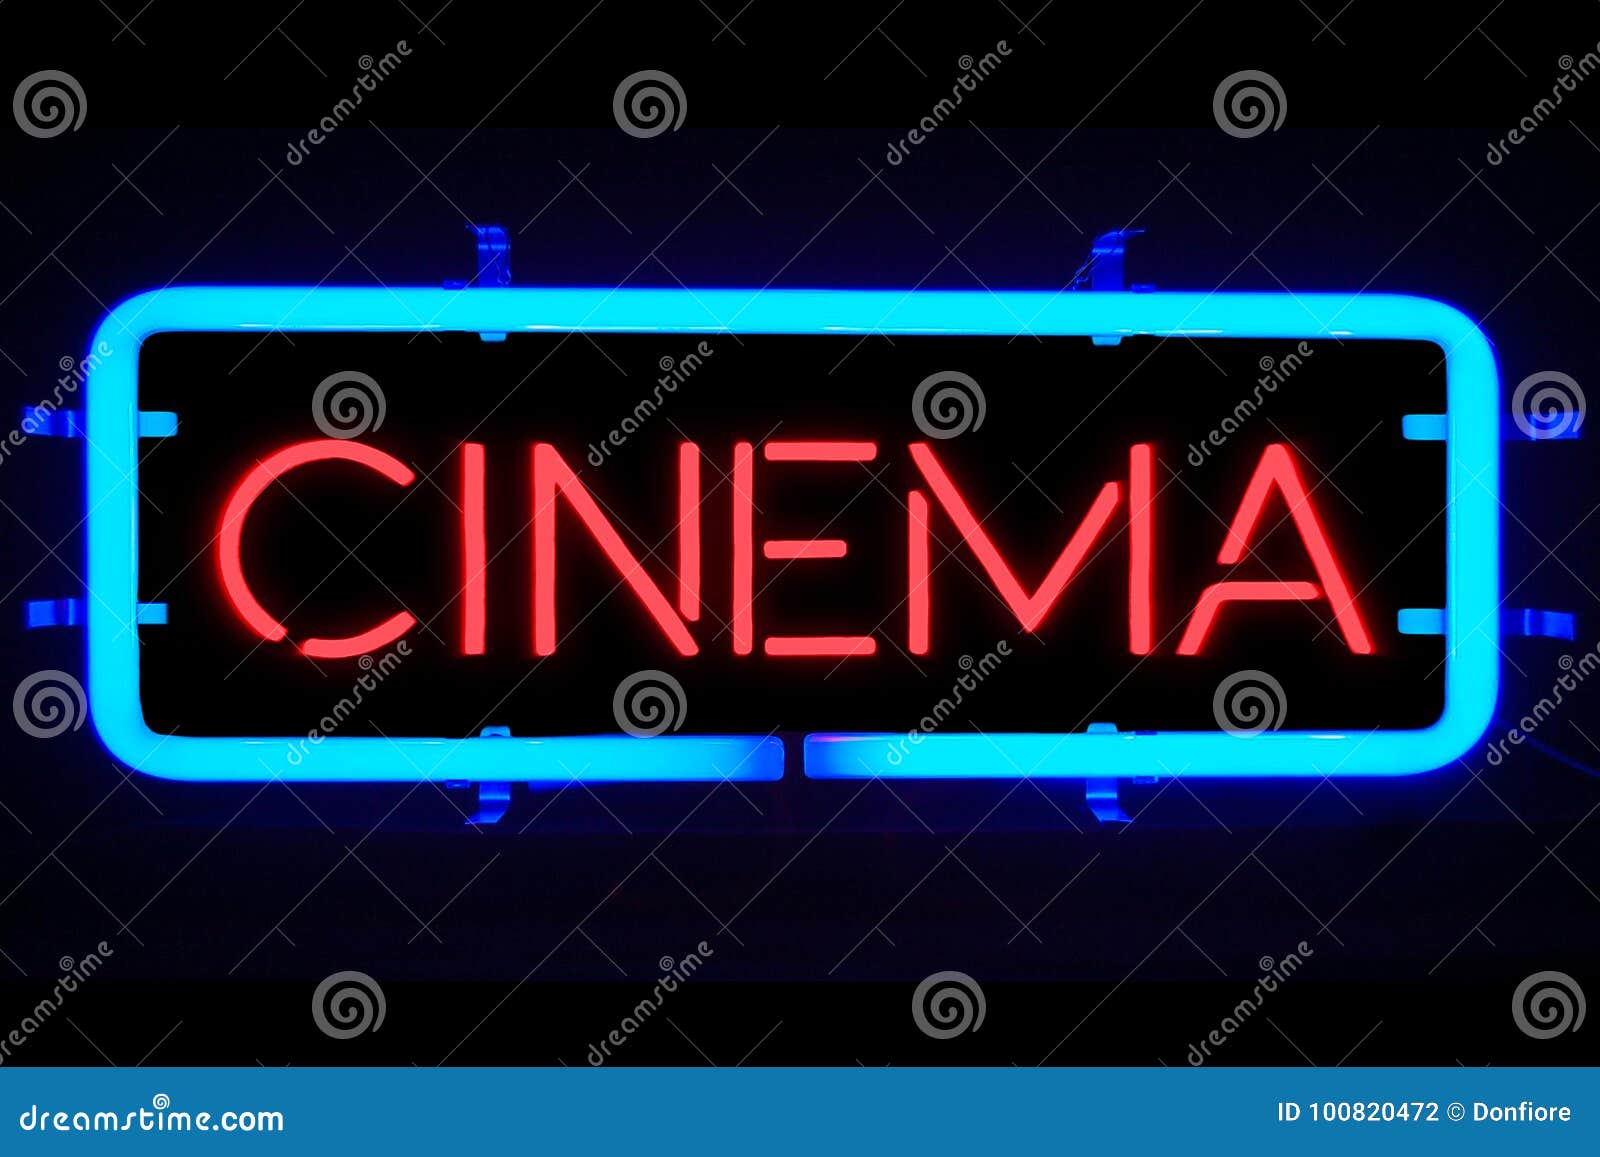 3d rendering flickering blinking red blue neon sign on black background, cinema movie film entertainment sign